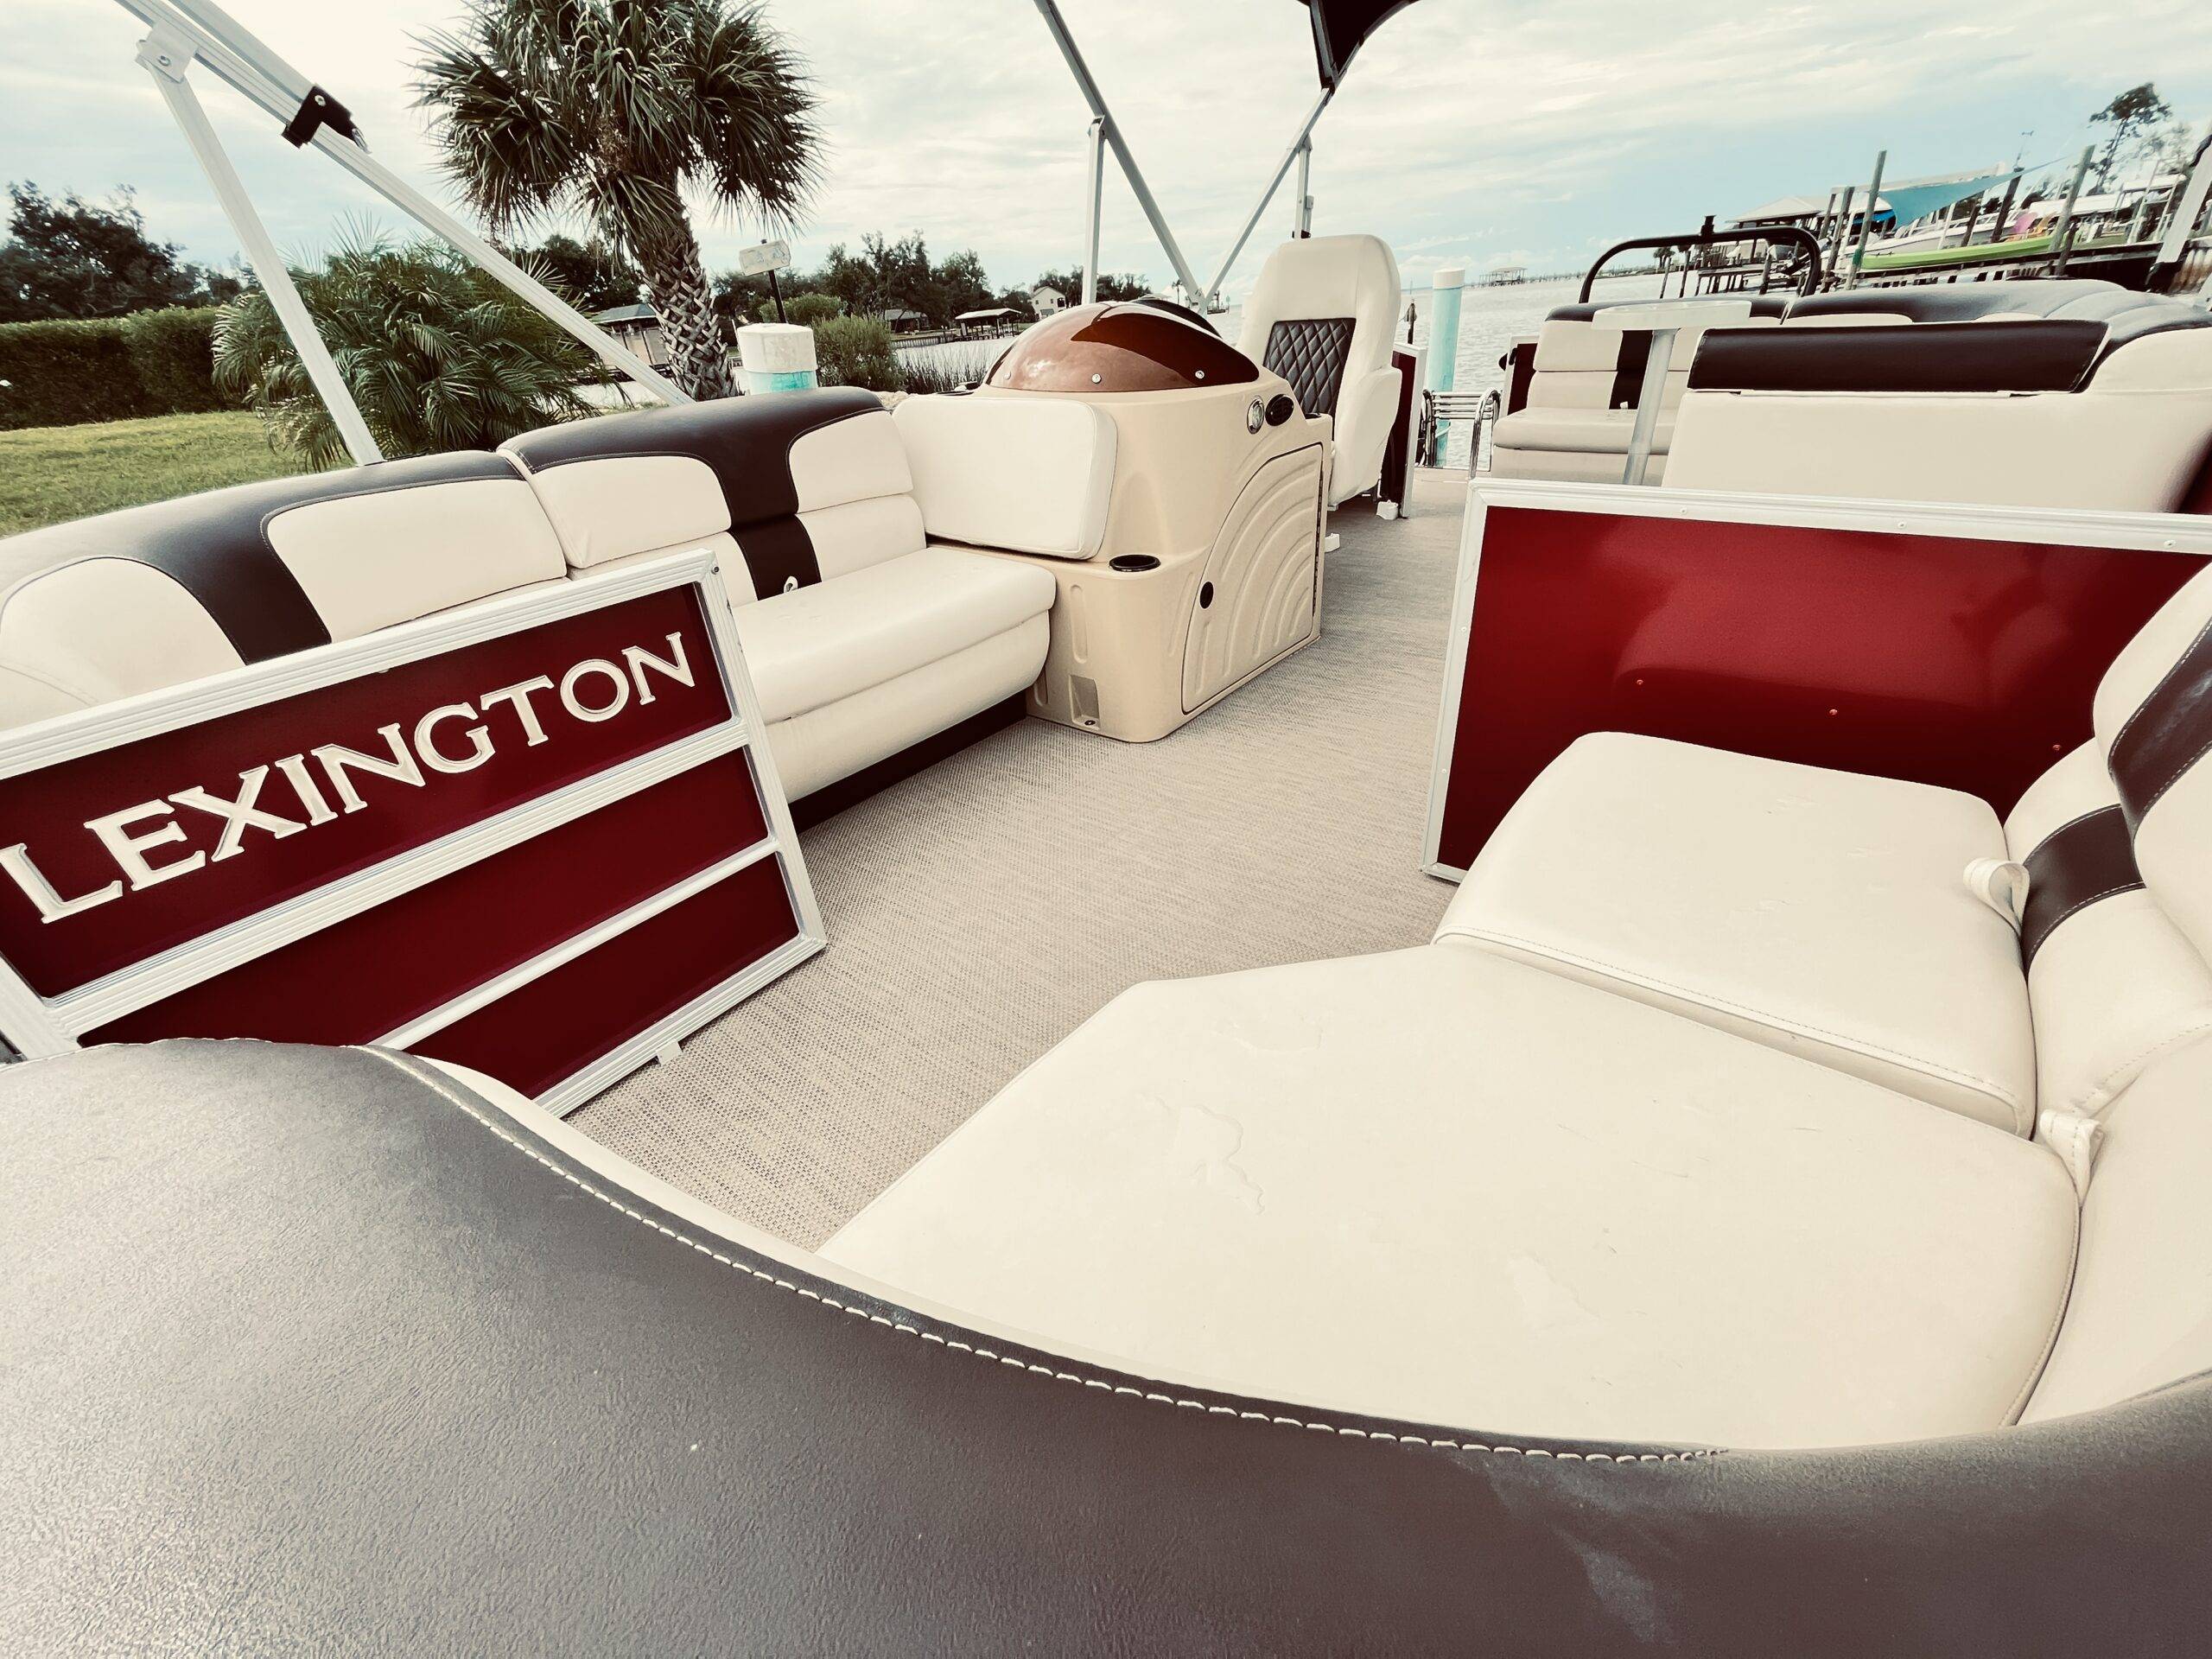 Interior of a "Lexington" 10 person pontoon boat.